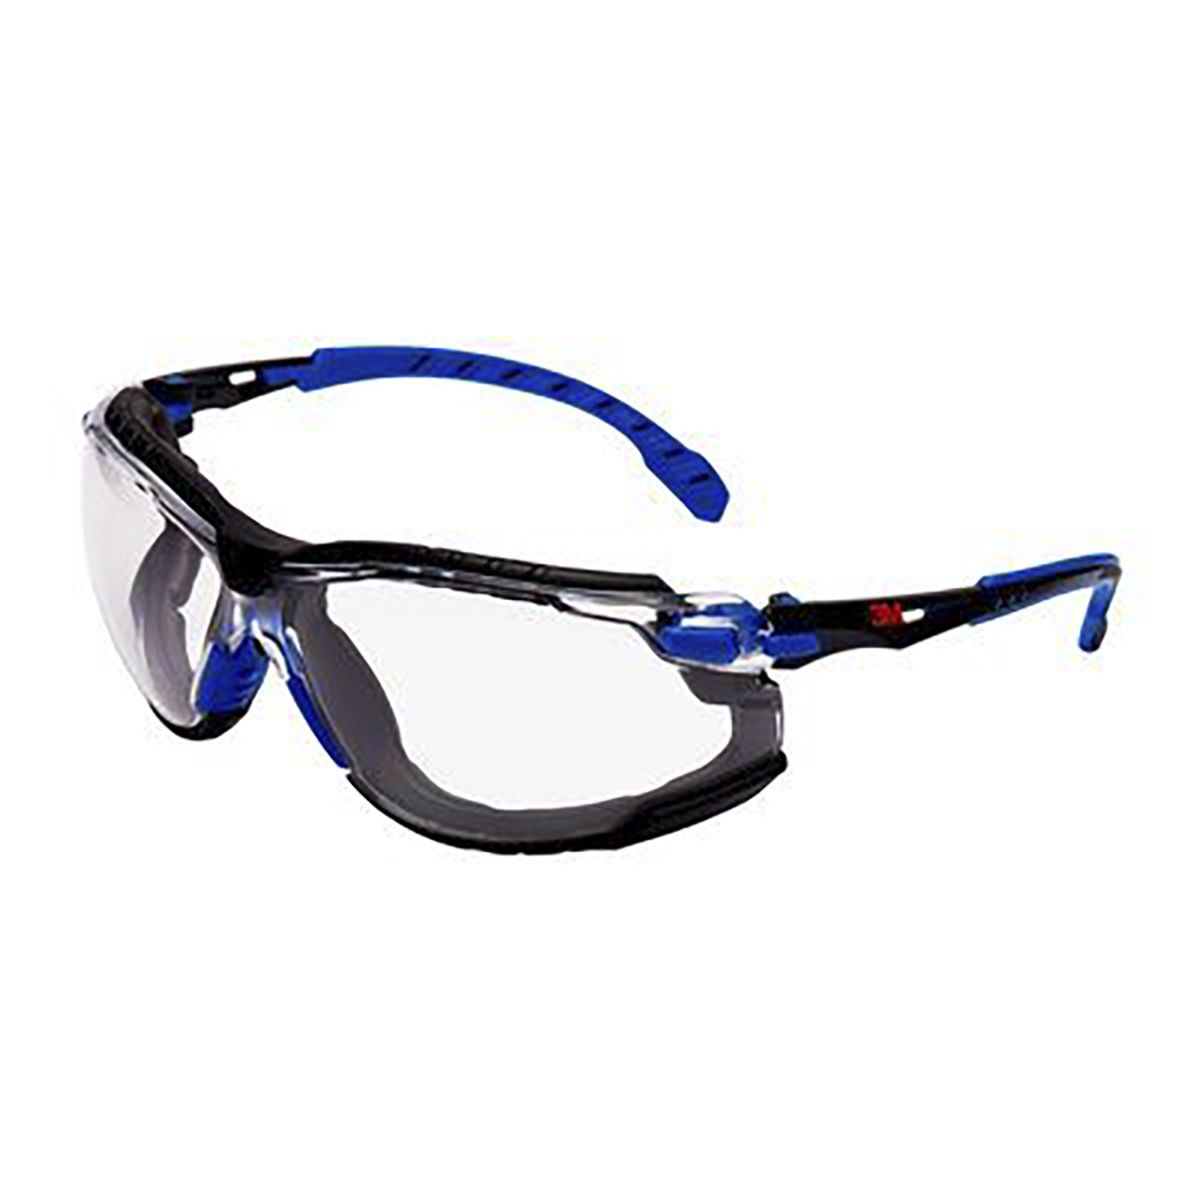 S1101skt 3m Solus™ 1000 Anti Mist Uv Safety Glasses Clear Polycarbonate Lens Rs